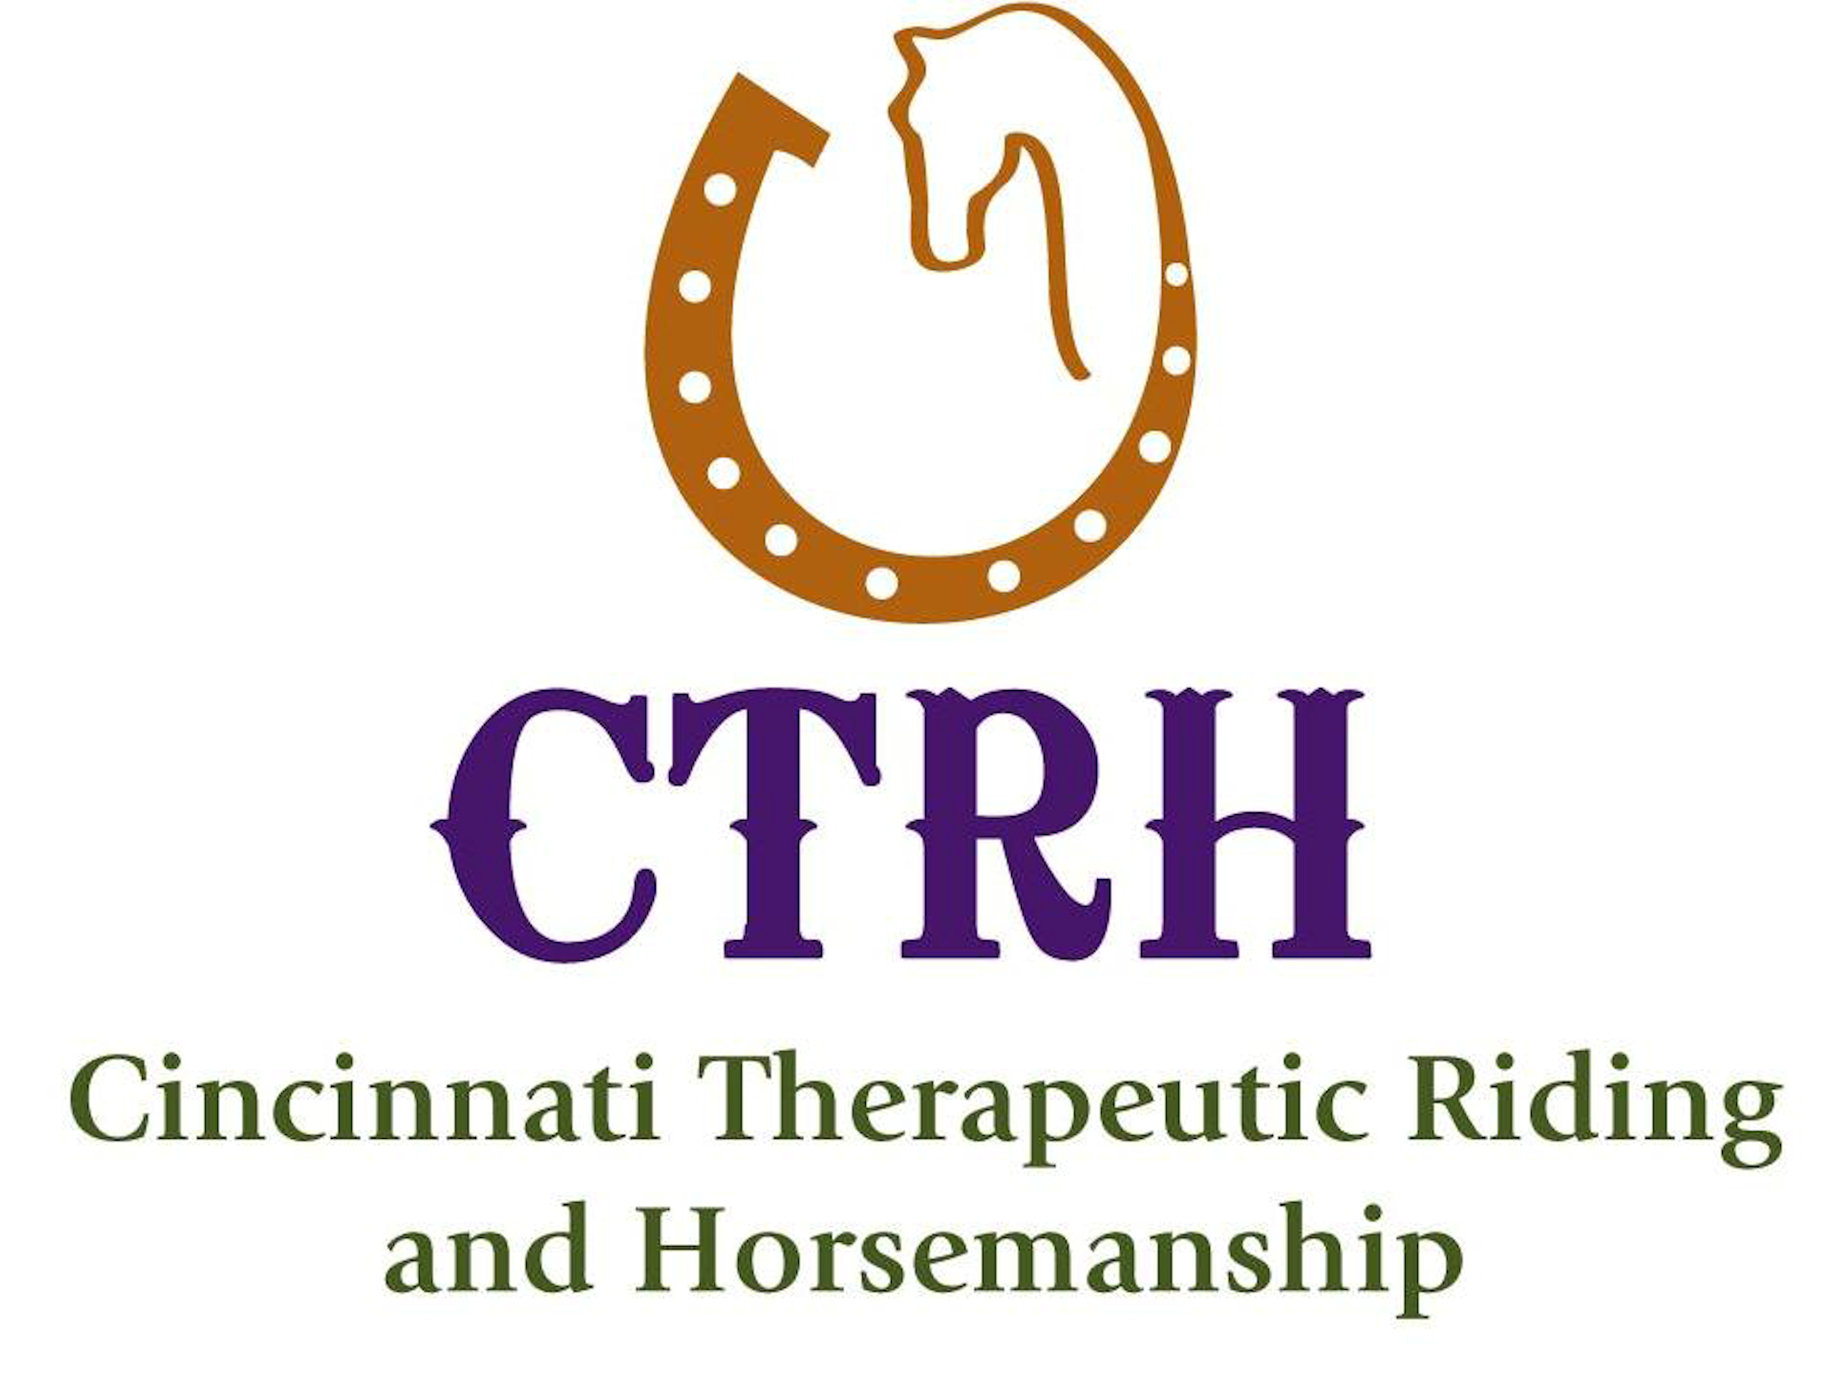 CTRH logo